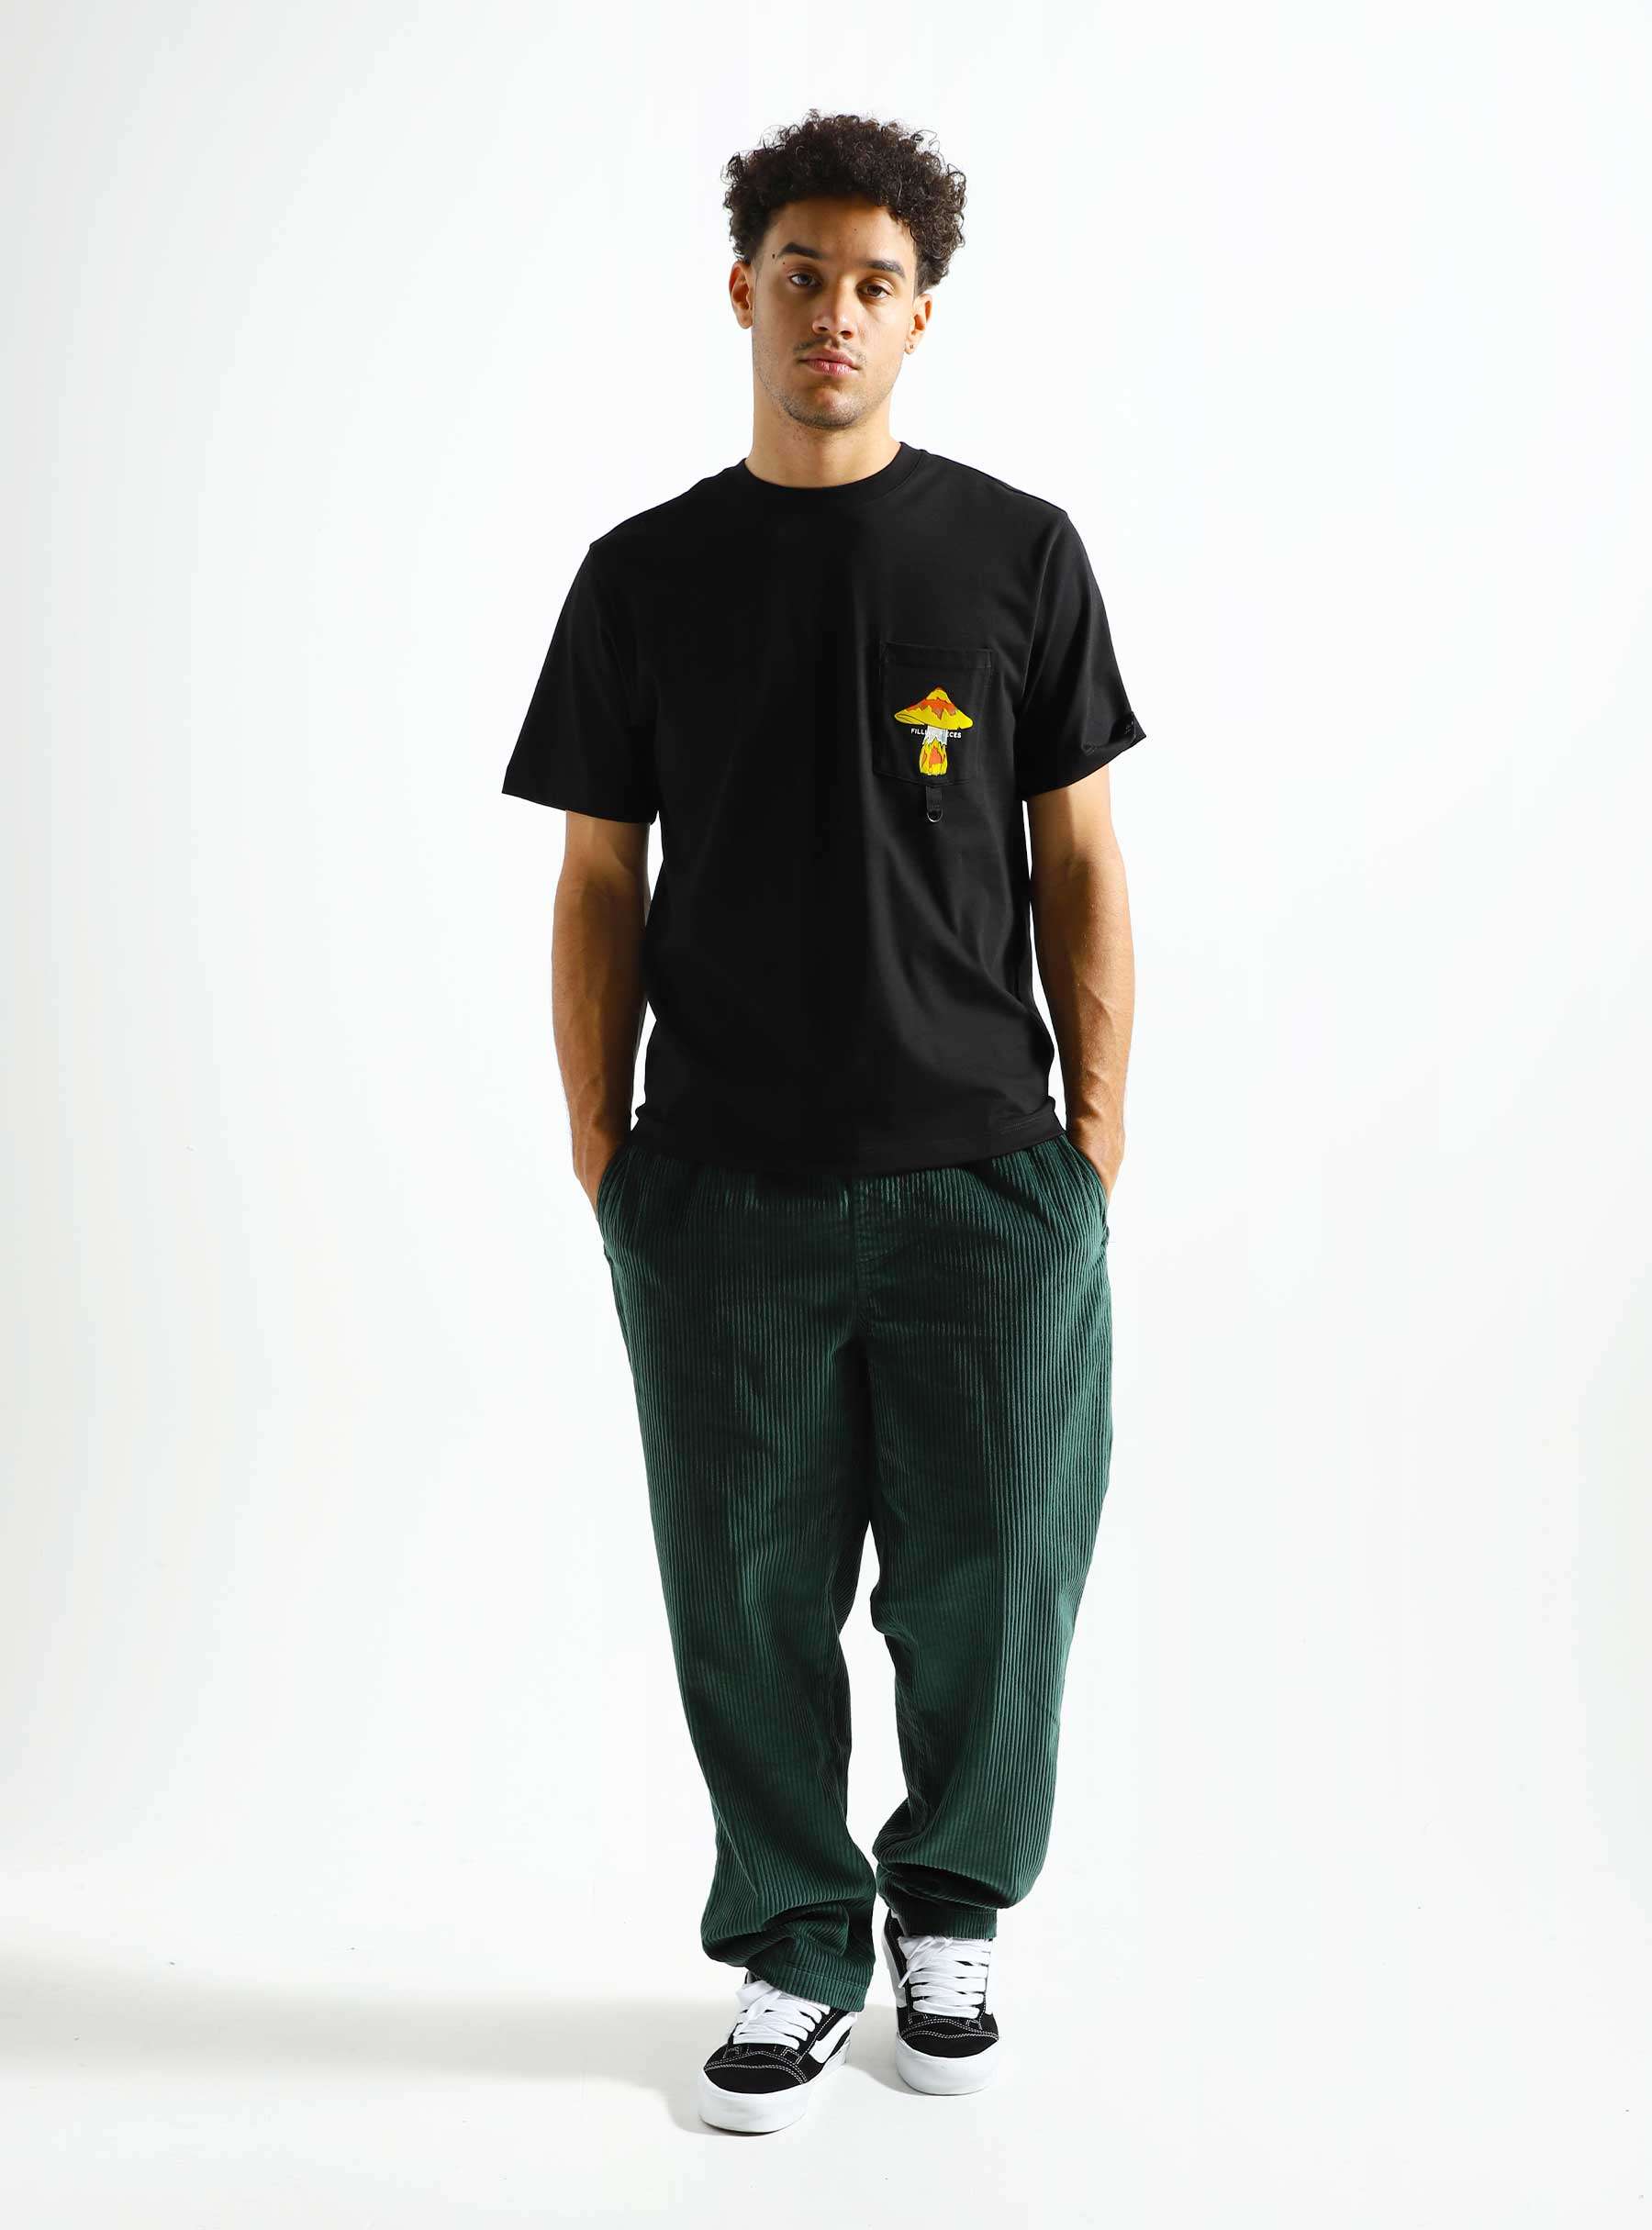 Pocket T-shirt Mushrooms Black 74413601025